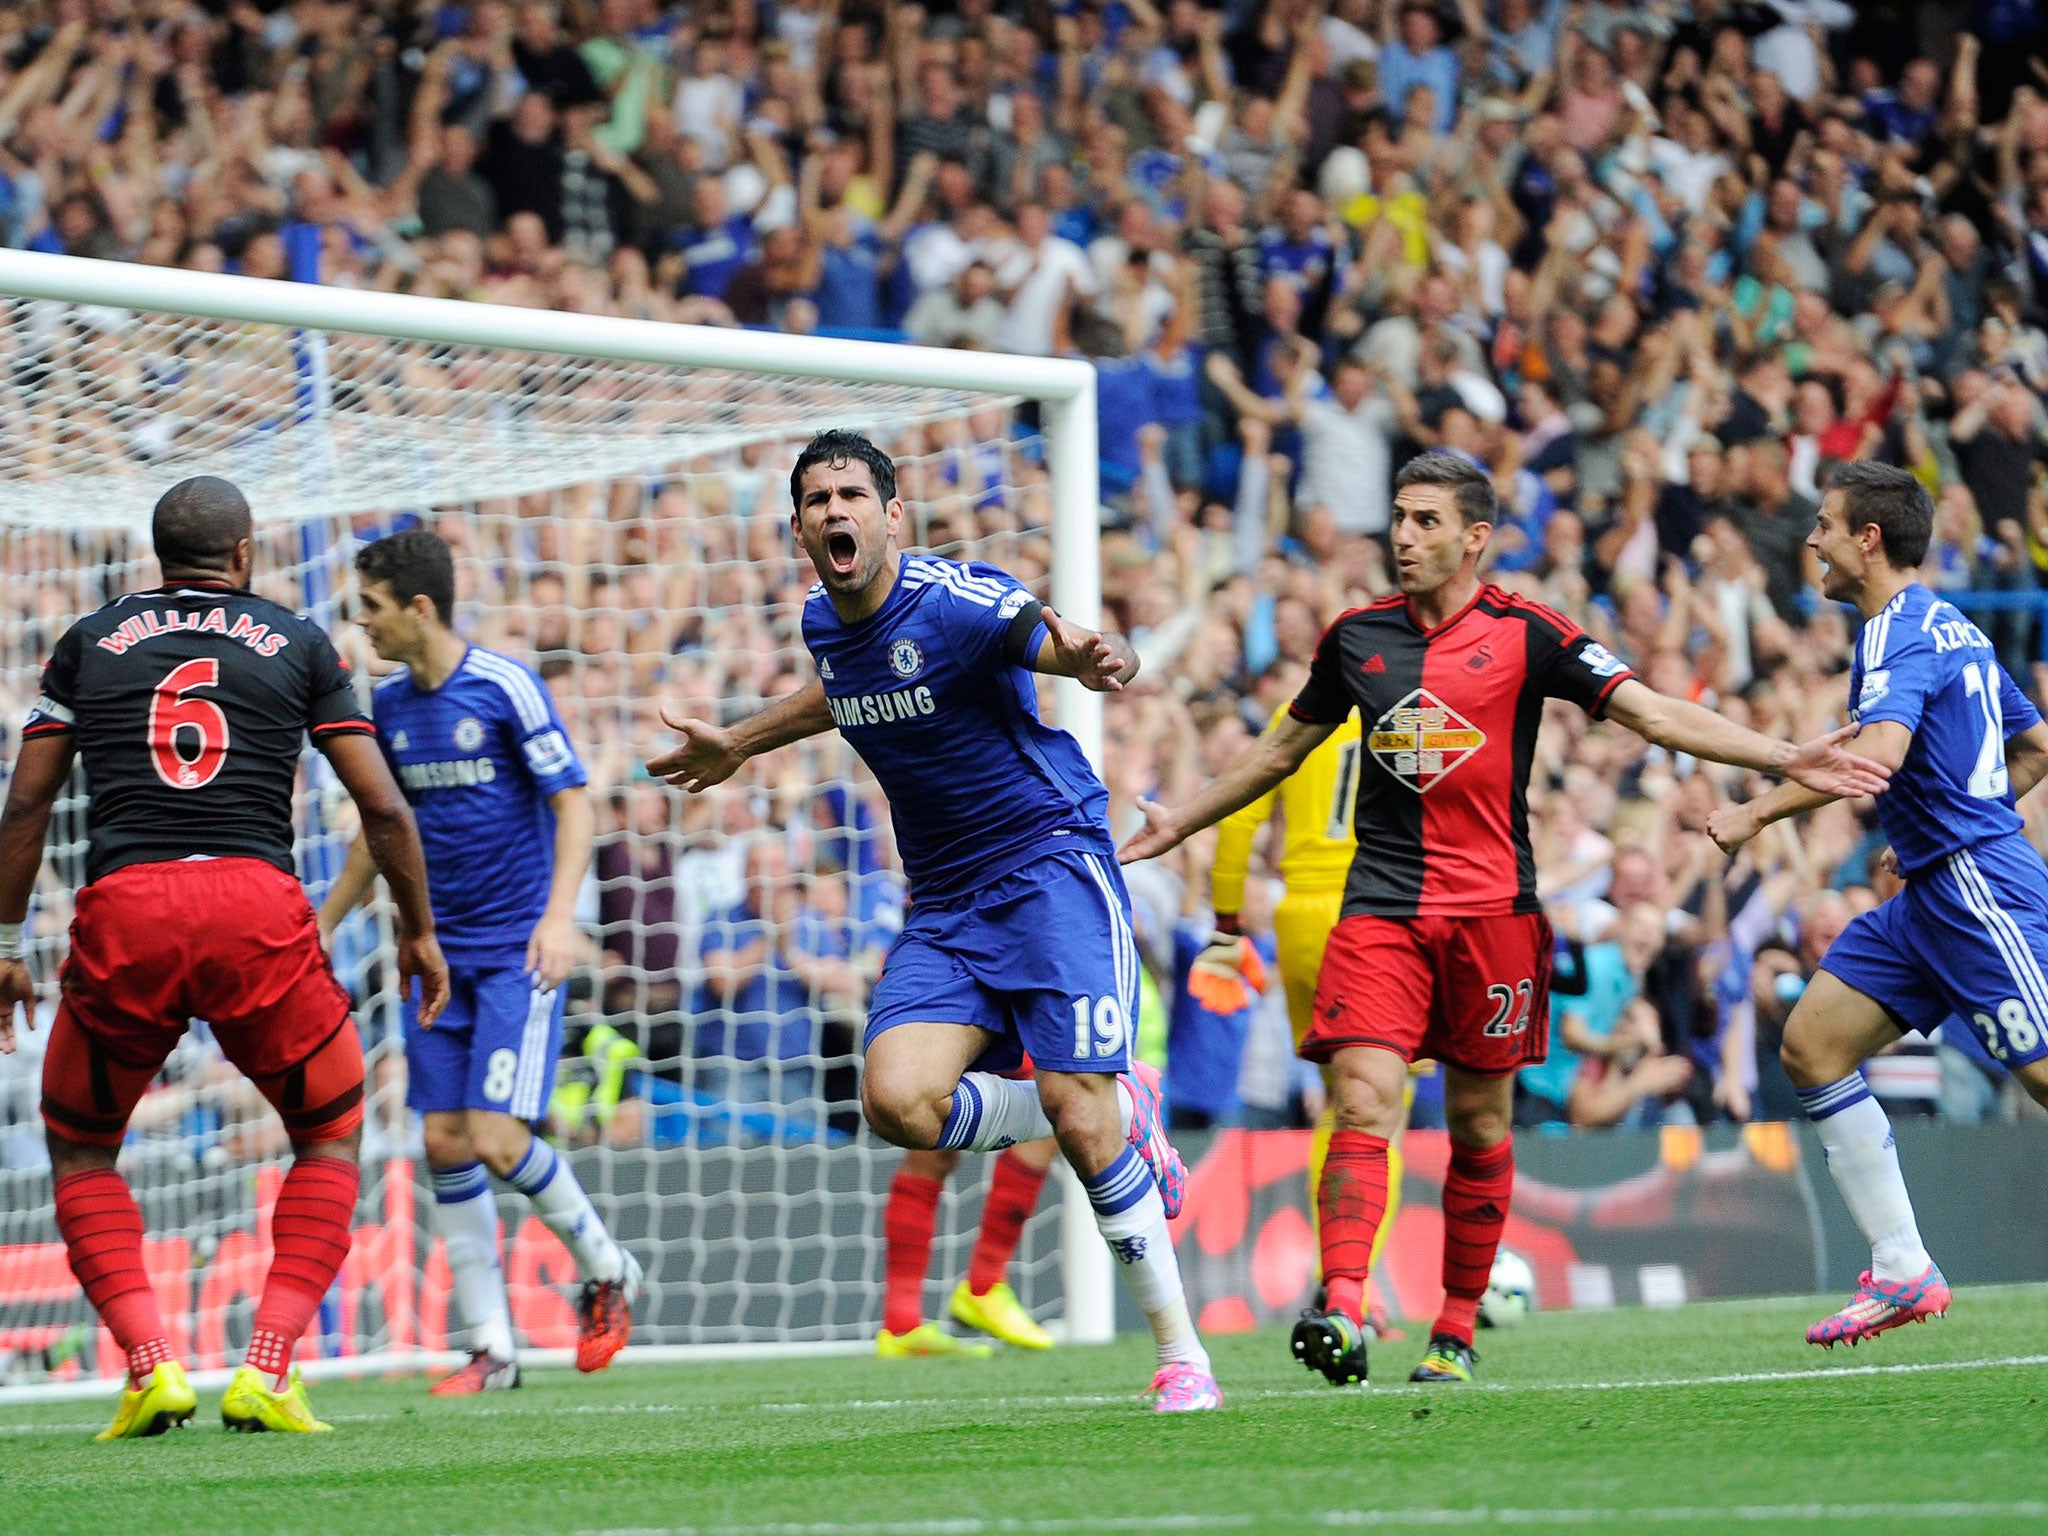 Chelsea striker Diego Costa celebrates scoring one of his hat-trick goals against Swansea